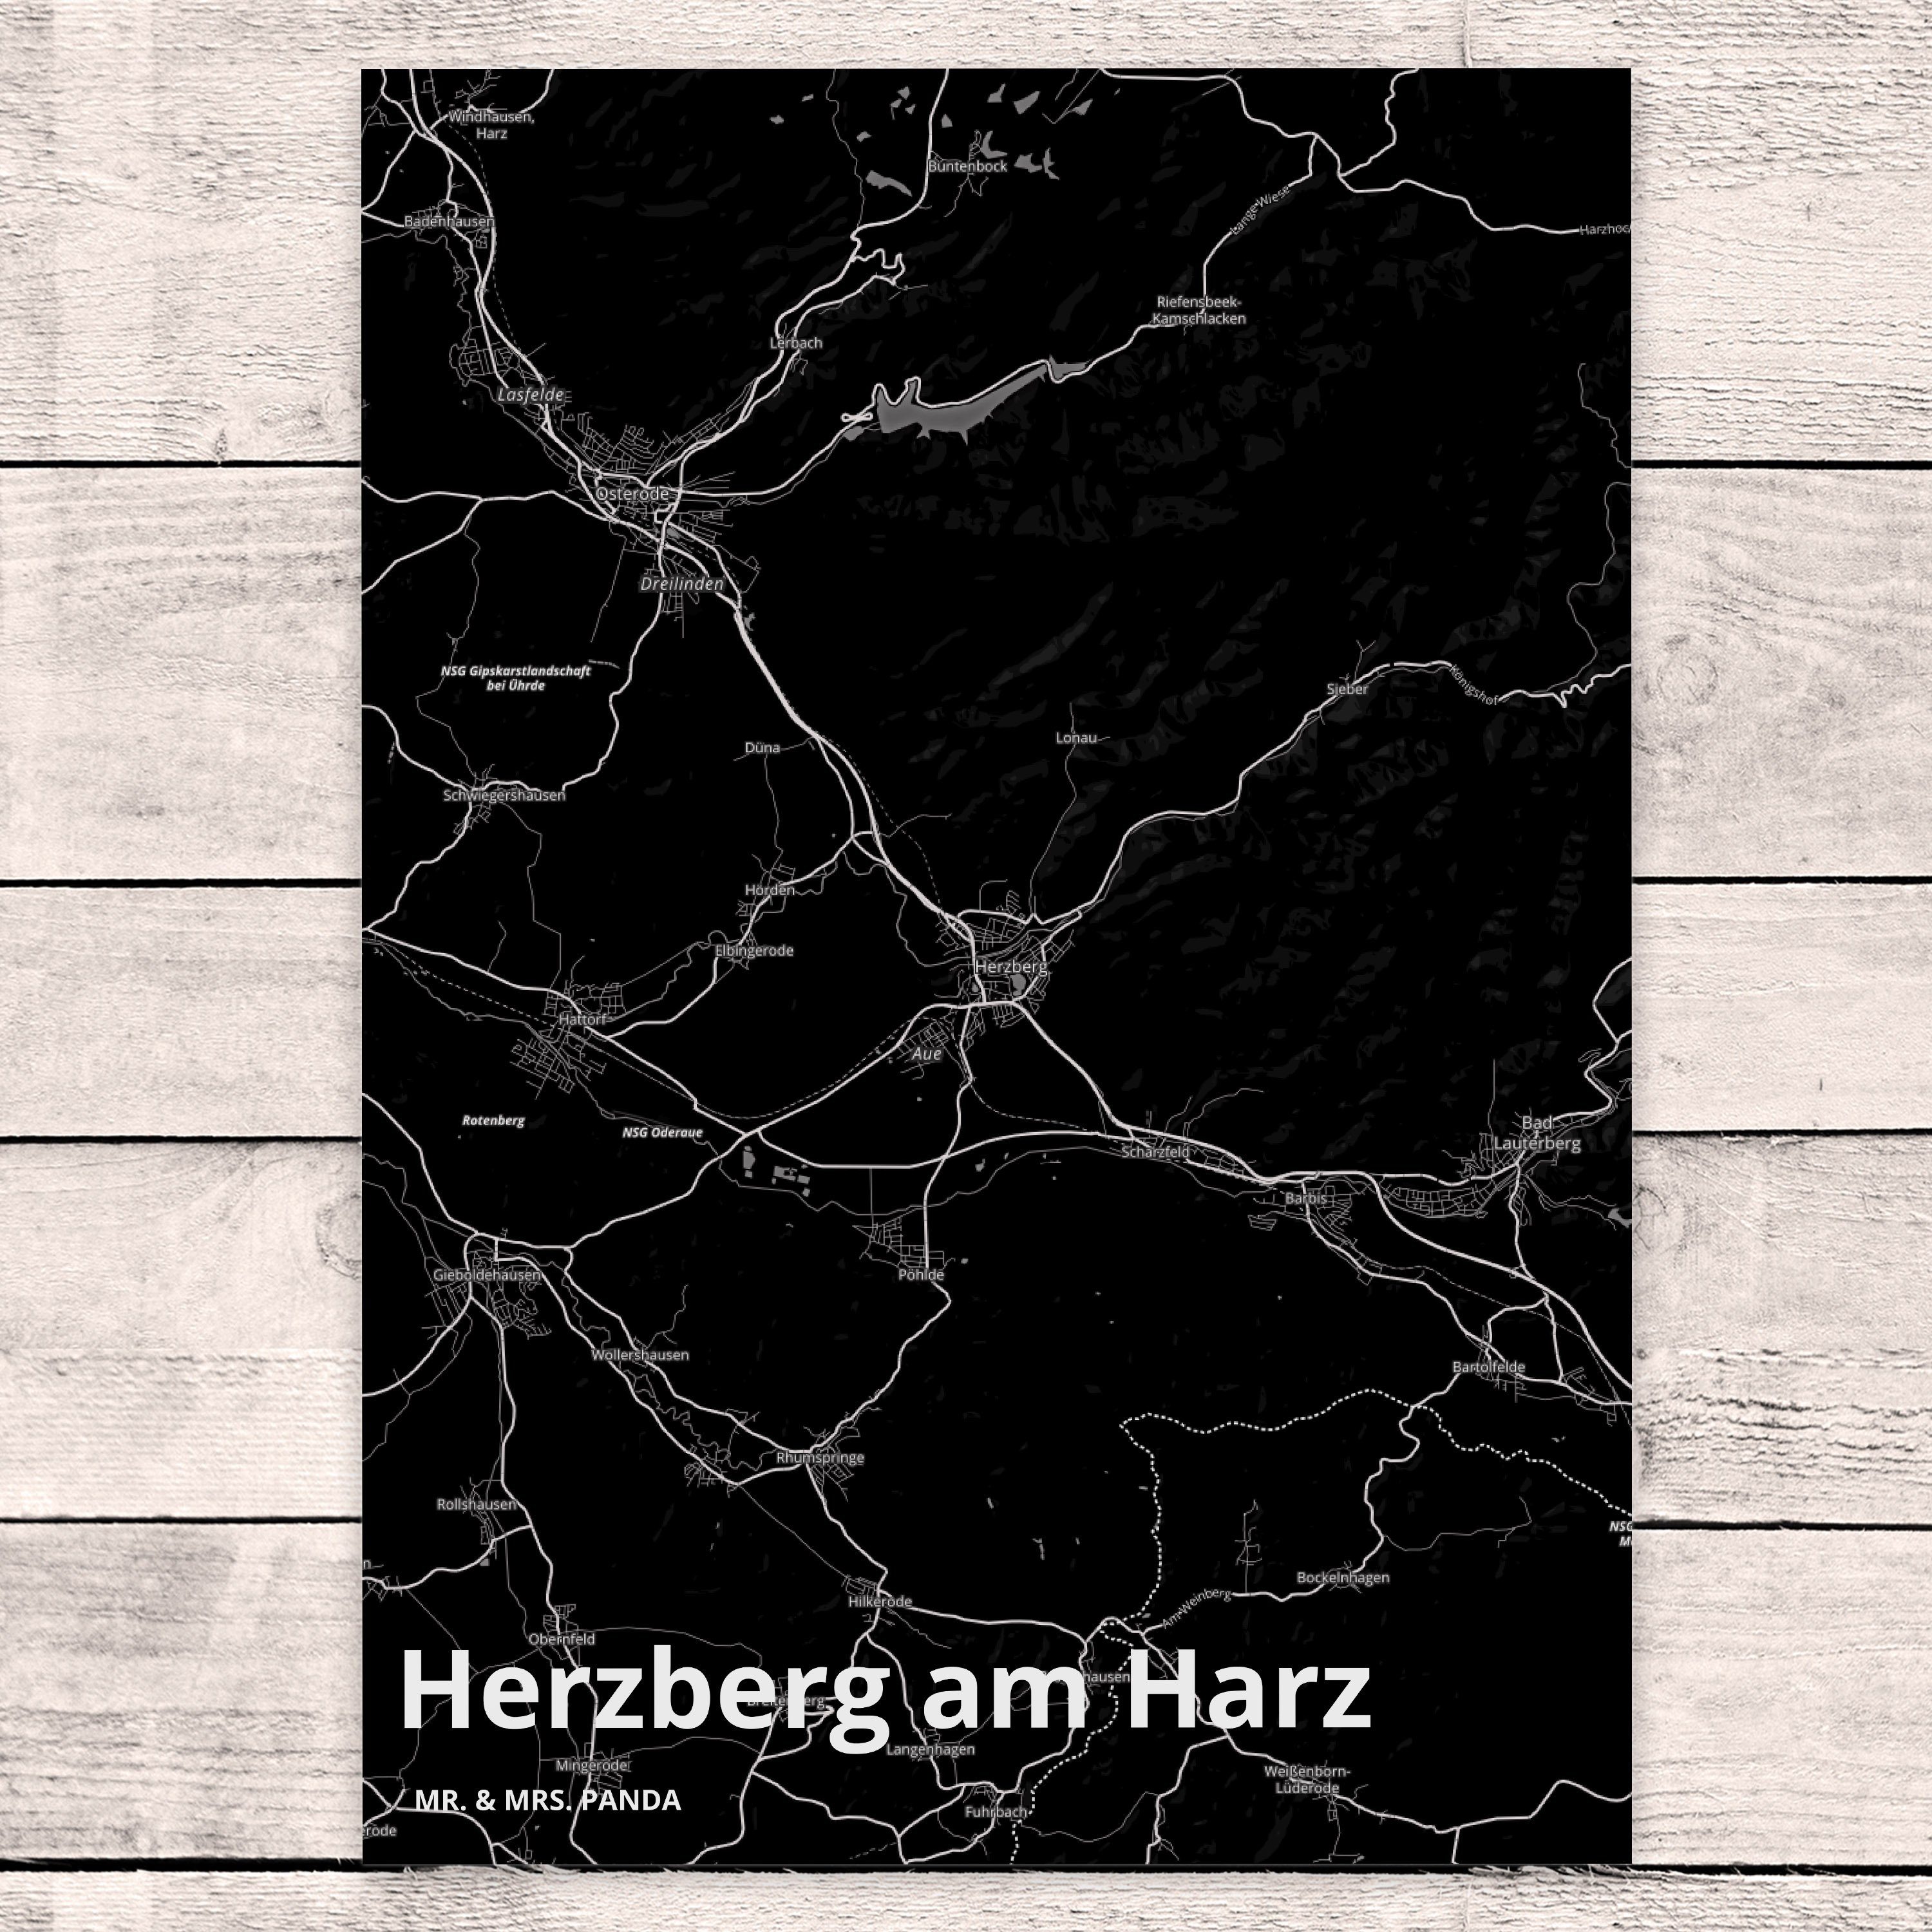 Mr. & St am Herzberg Dorf Mrs. Harz Karte, Panda Map Geschenk, Stadt - Postkarte Karte Landkarte